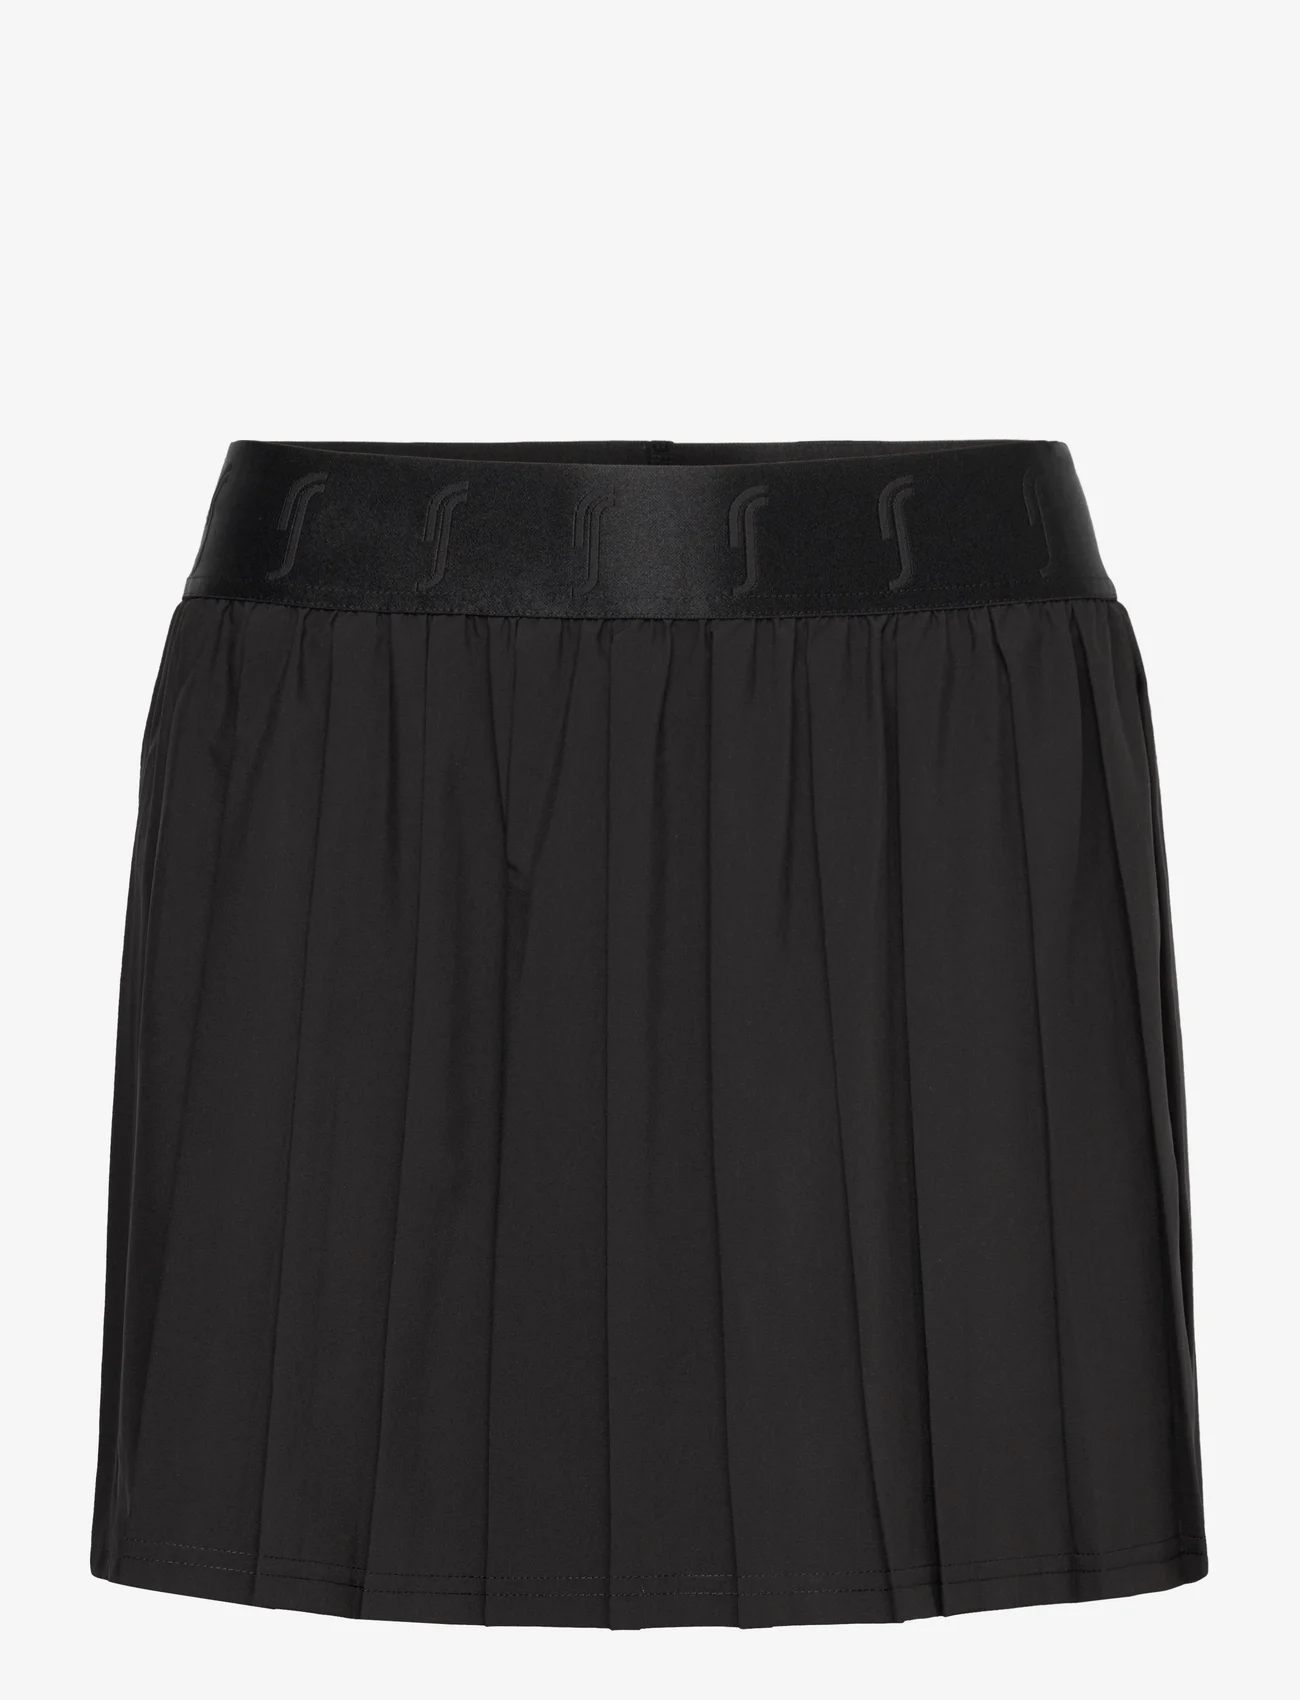 RS Sports - Women’s Pleated Skirt - faltenröcke - black - 0